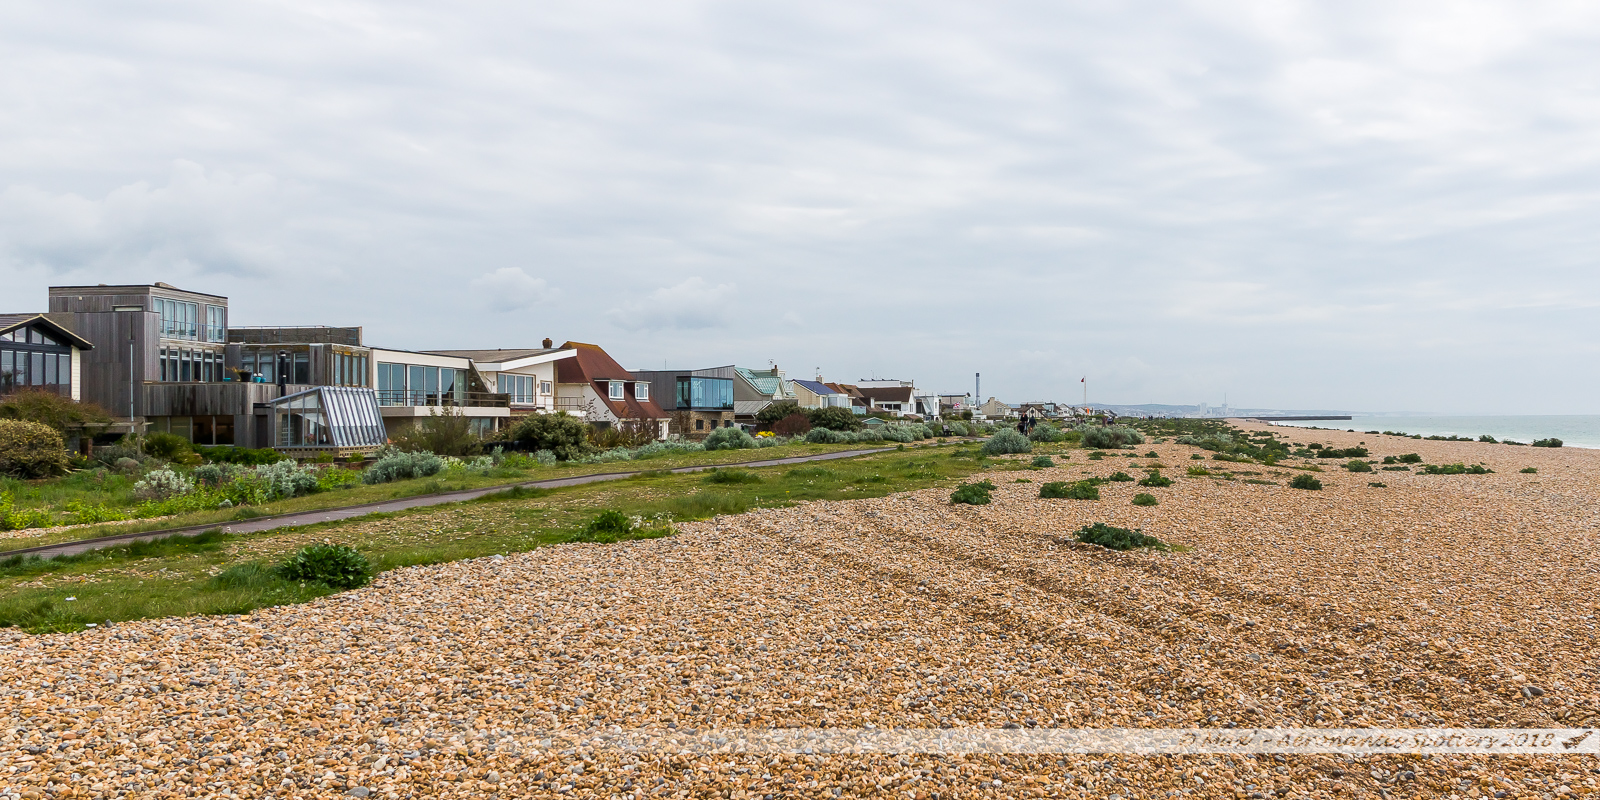 Plage de galets de Shoreham-on-the Sea, Brighton au loin